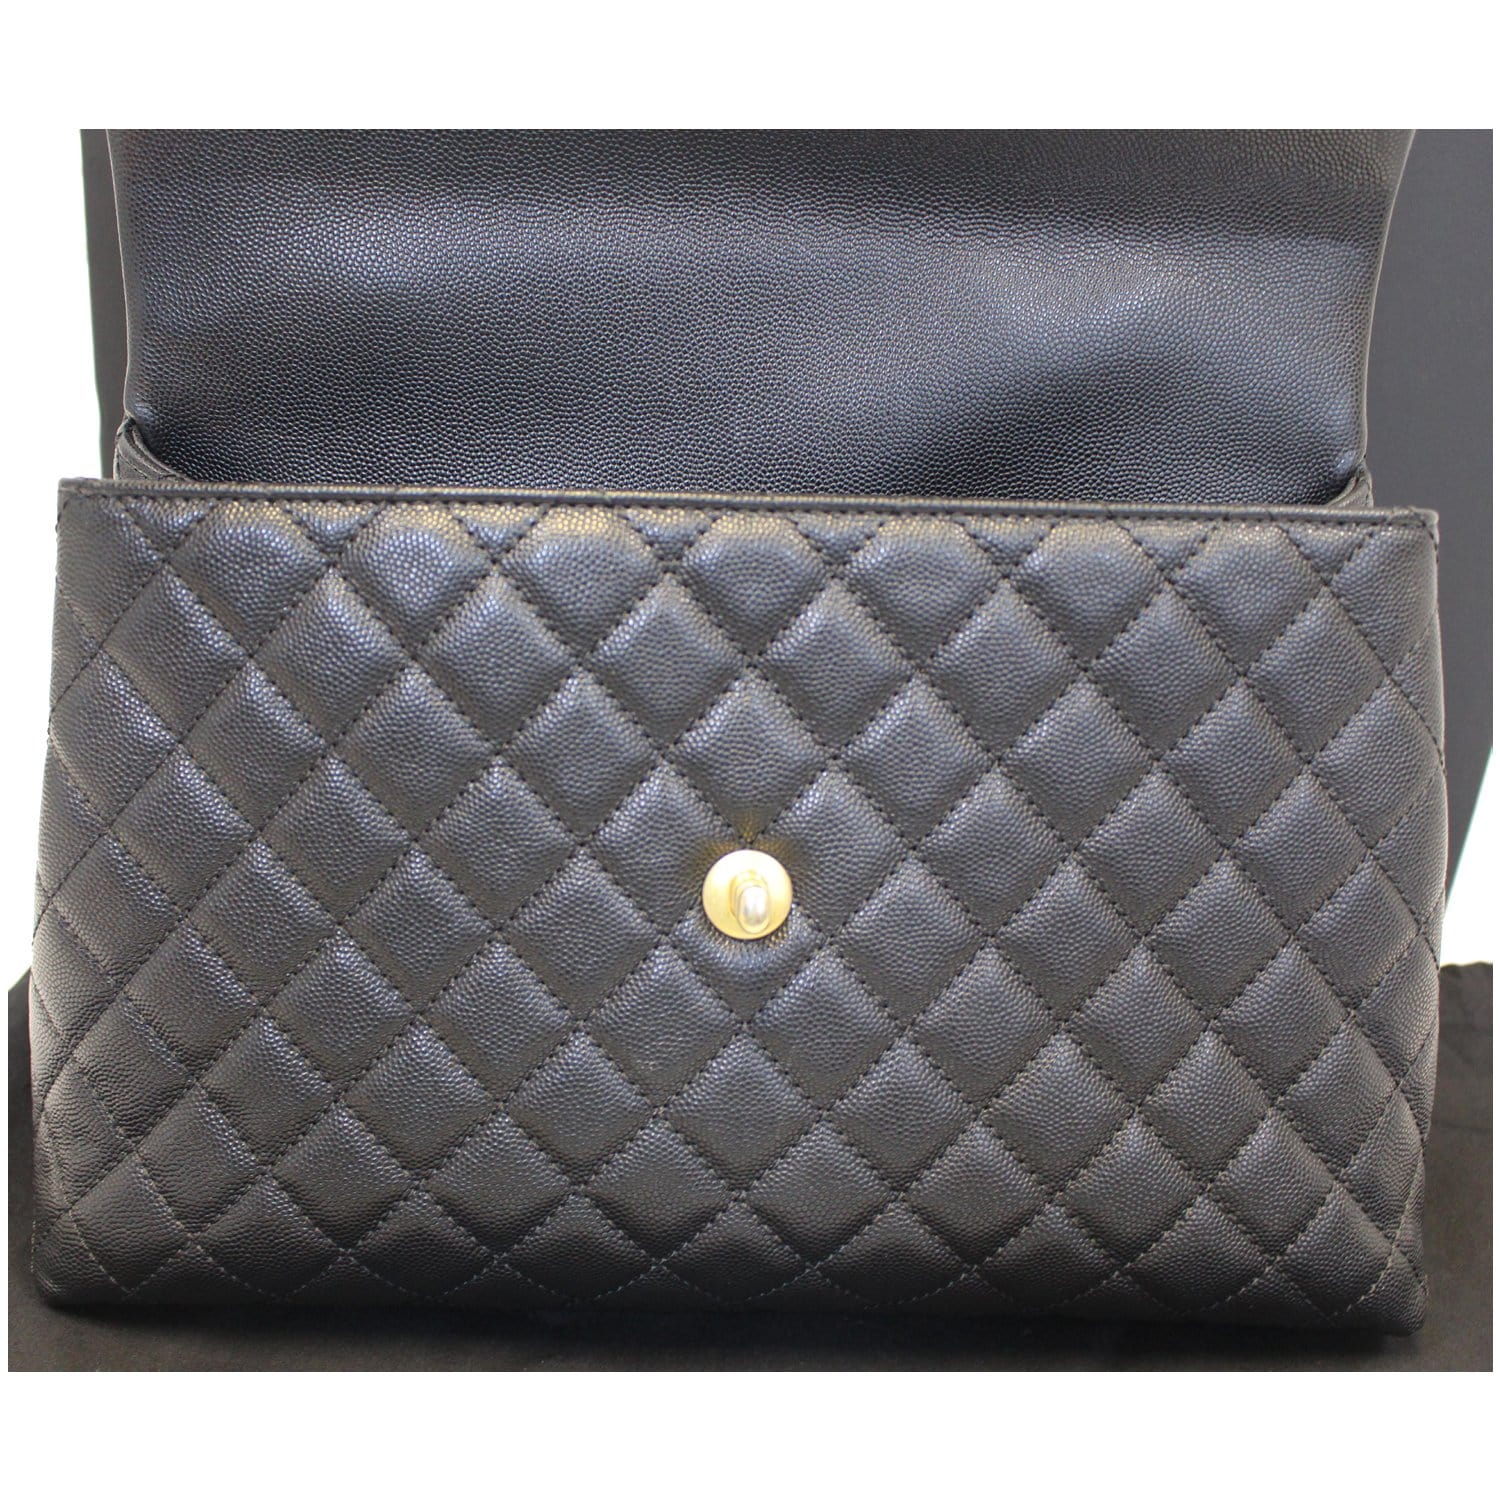 Chanel Medium Coco Handle Flap Bag Black Quilted Caviar/Black